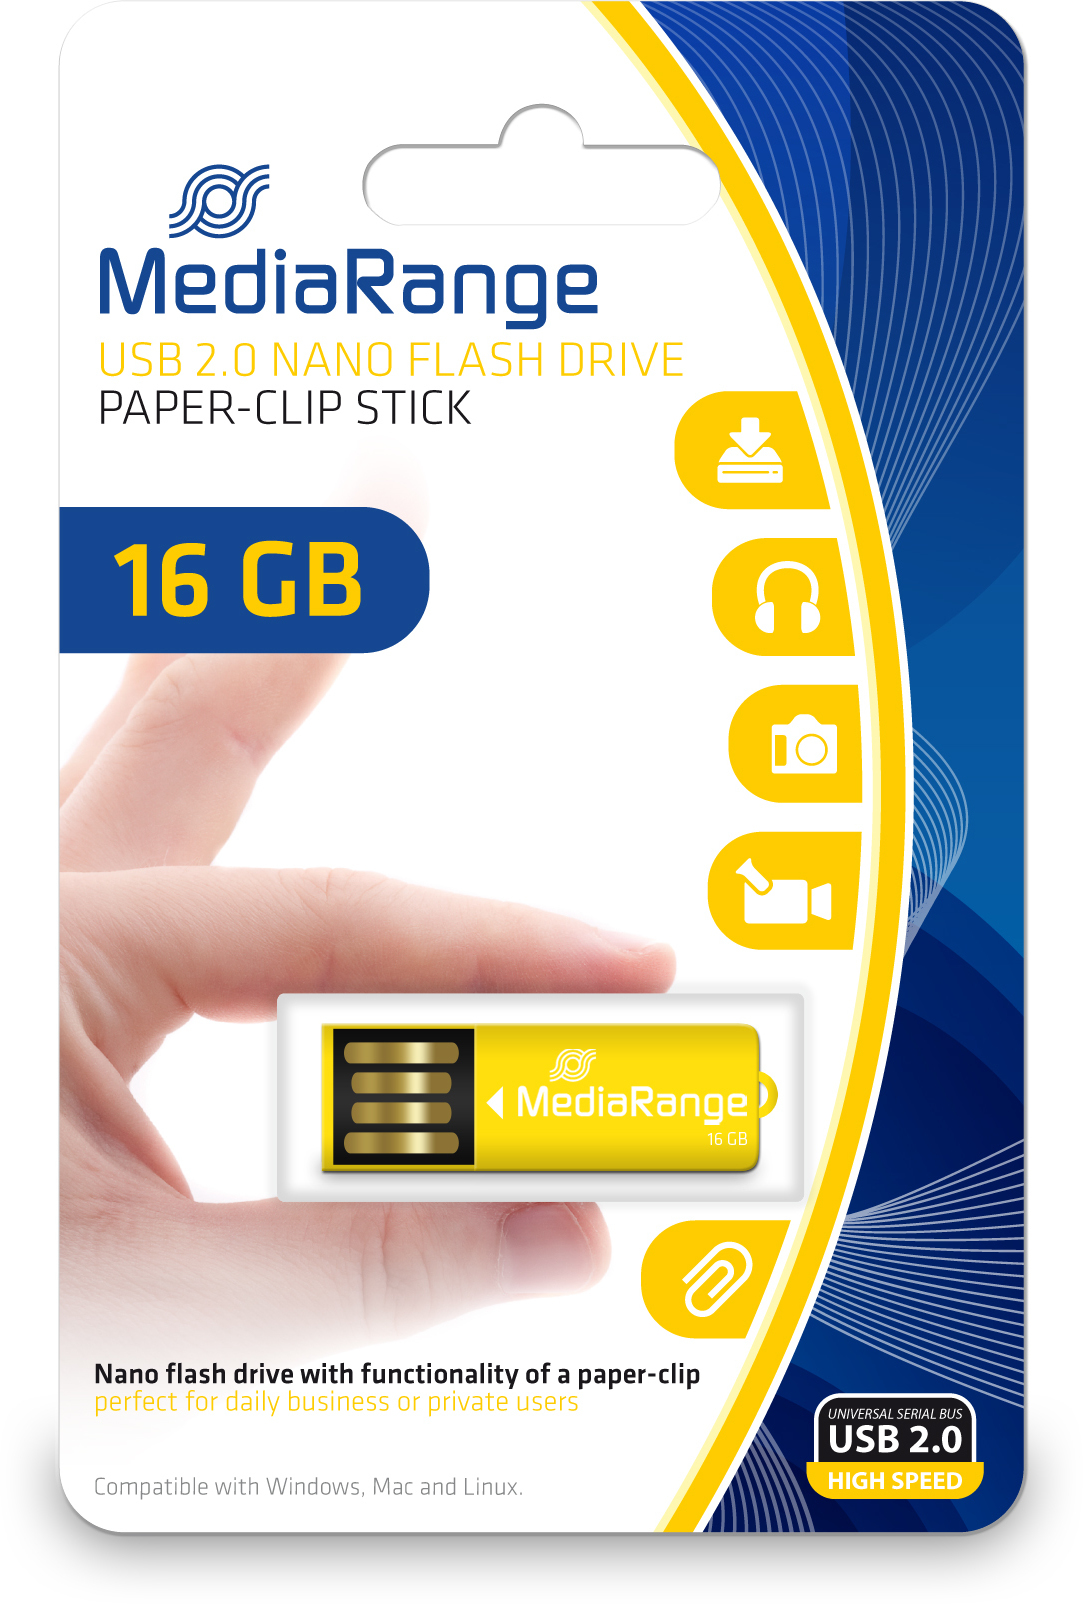 MediaRange USB nano flash drive 16GB paper-clip stick